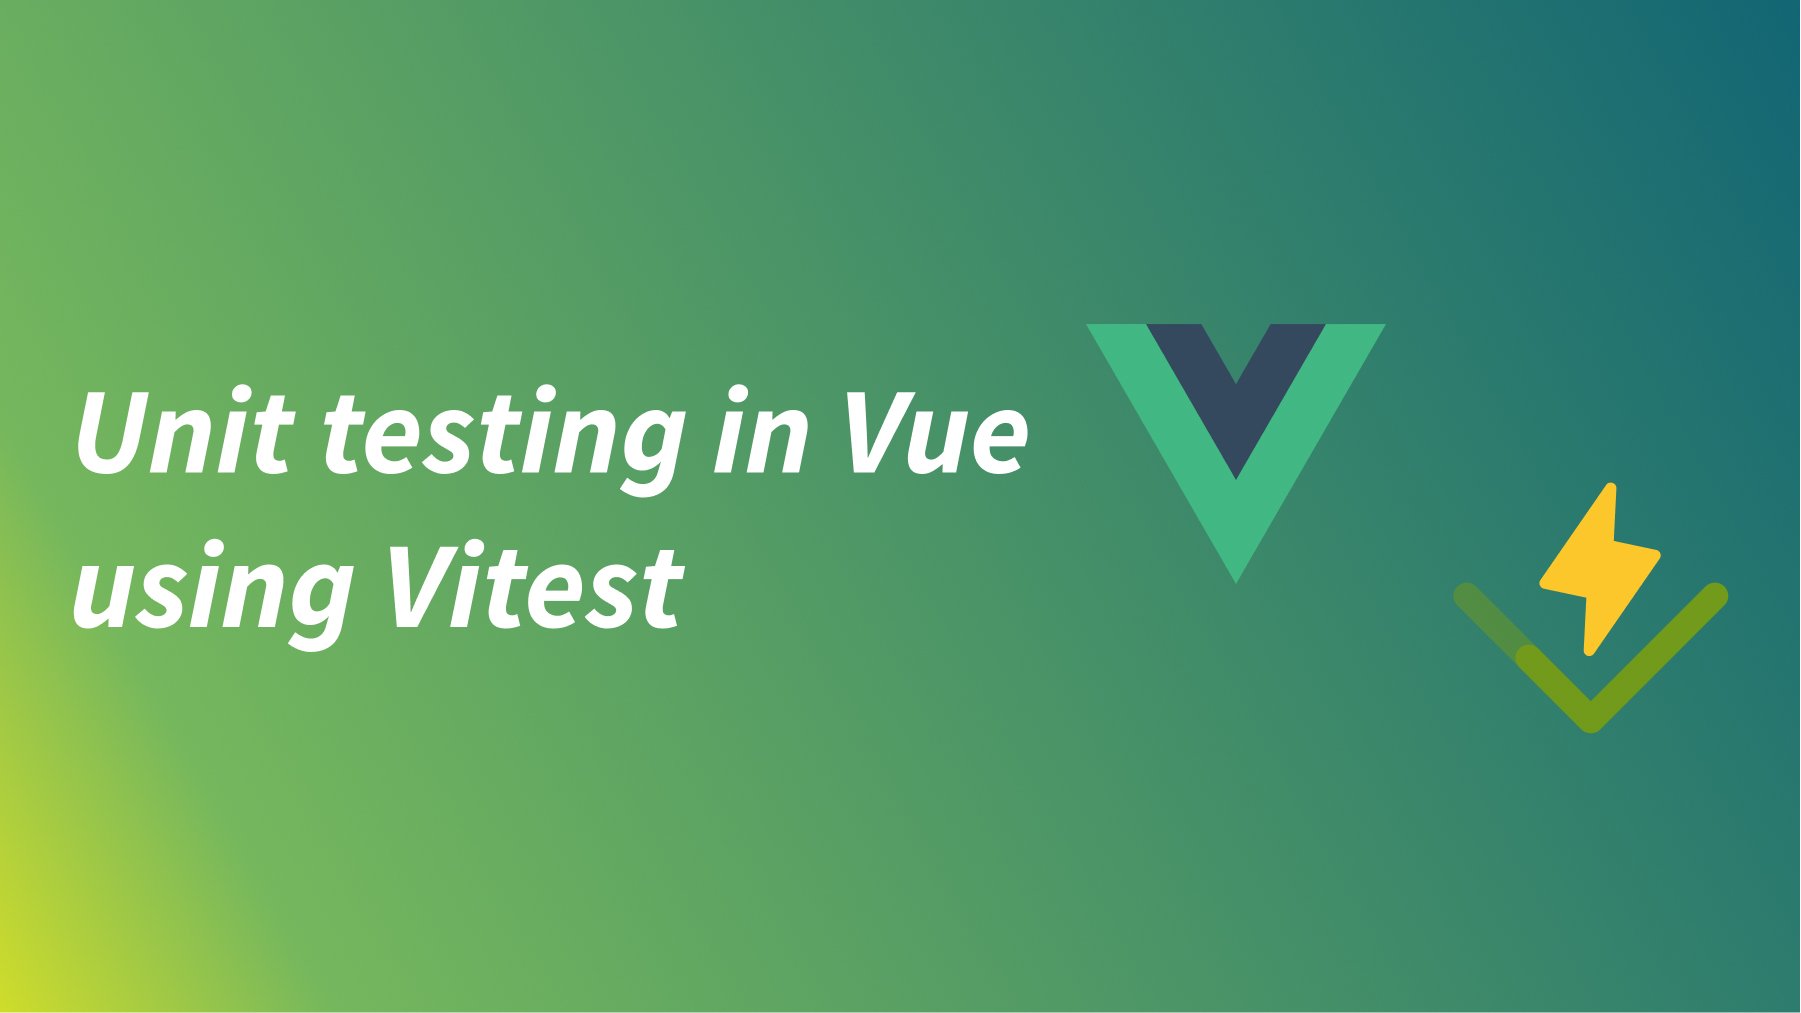 Unit testing in Vue using Vitest